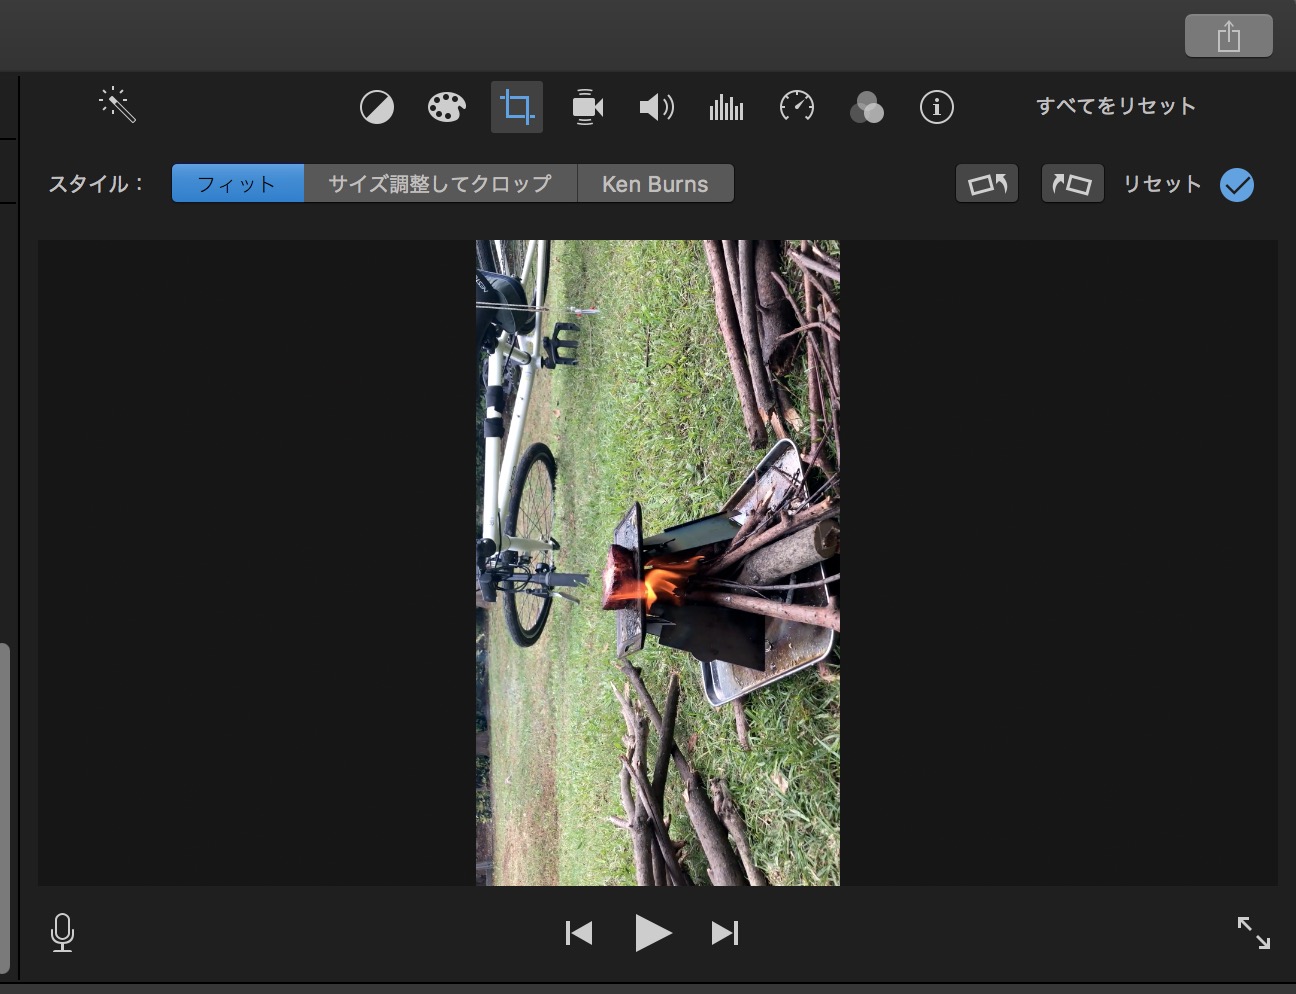 【Mac】横画面で撮影した動画をYouTubeショート用にMacのiMovieで縦画面に編集する方法